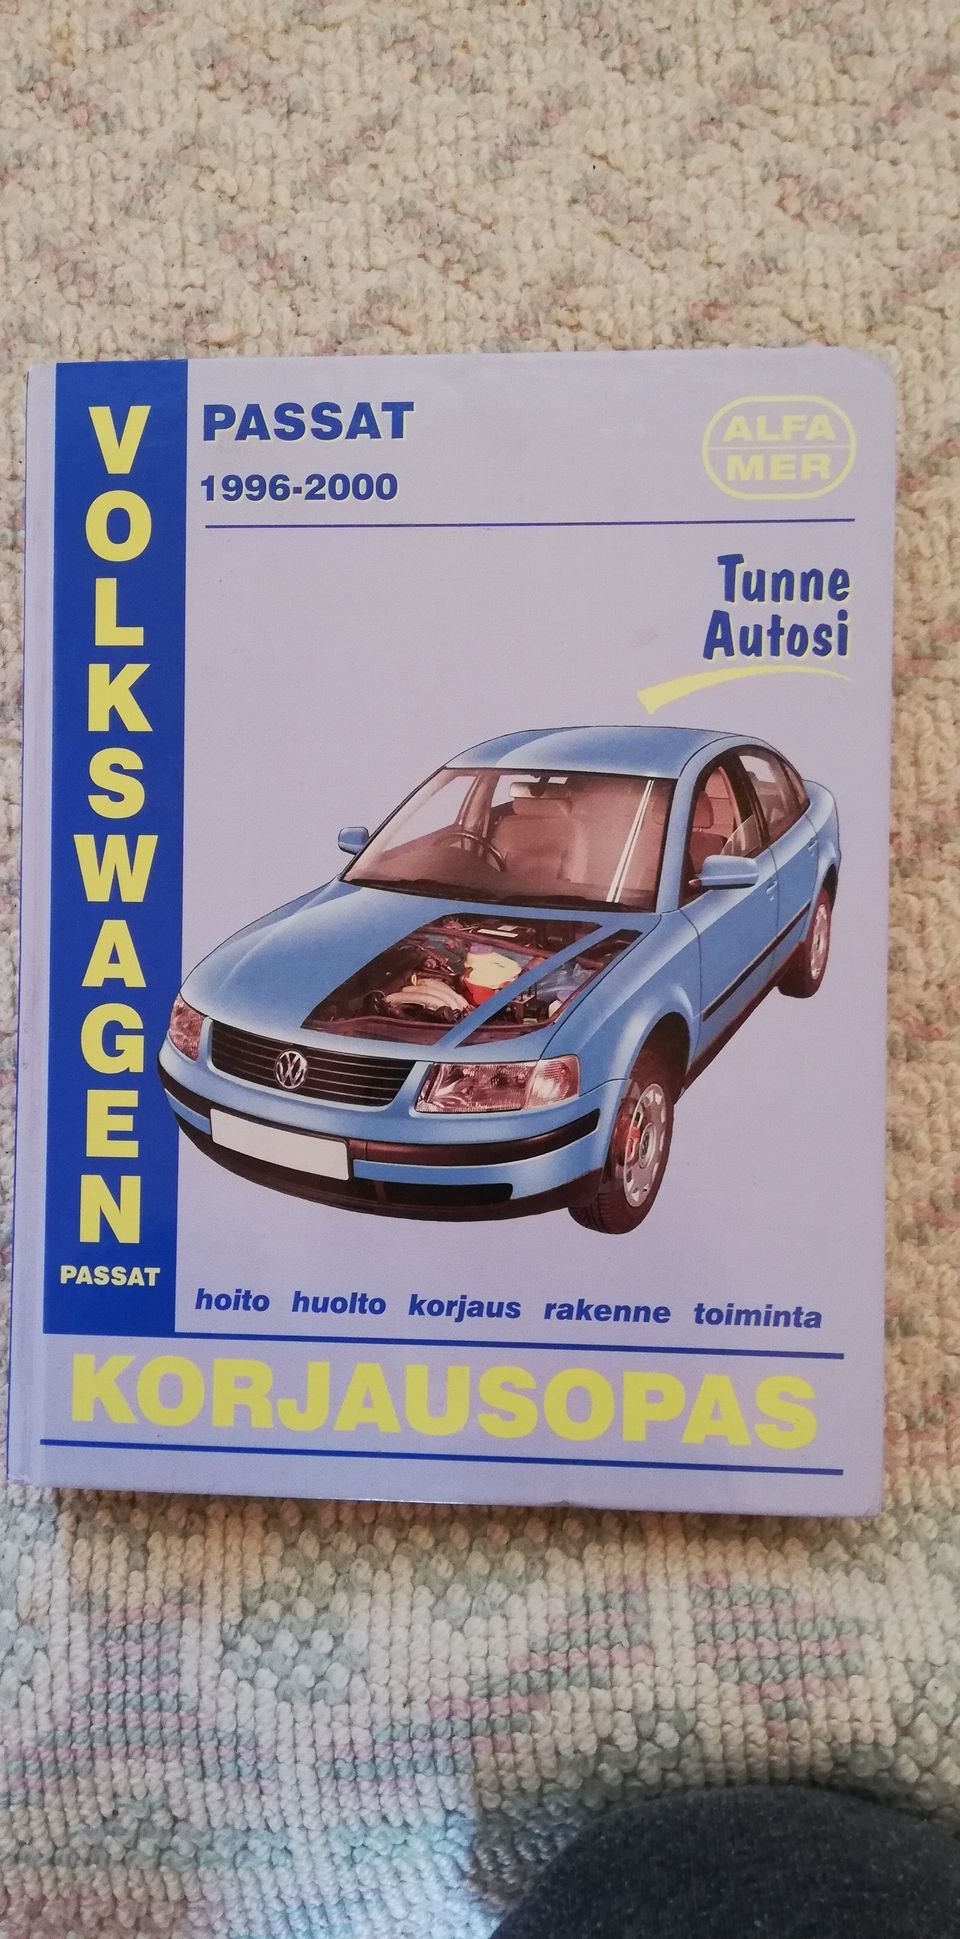 Volkswagen Passat 1996-2000 korjausopas